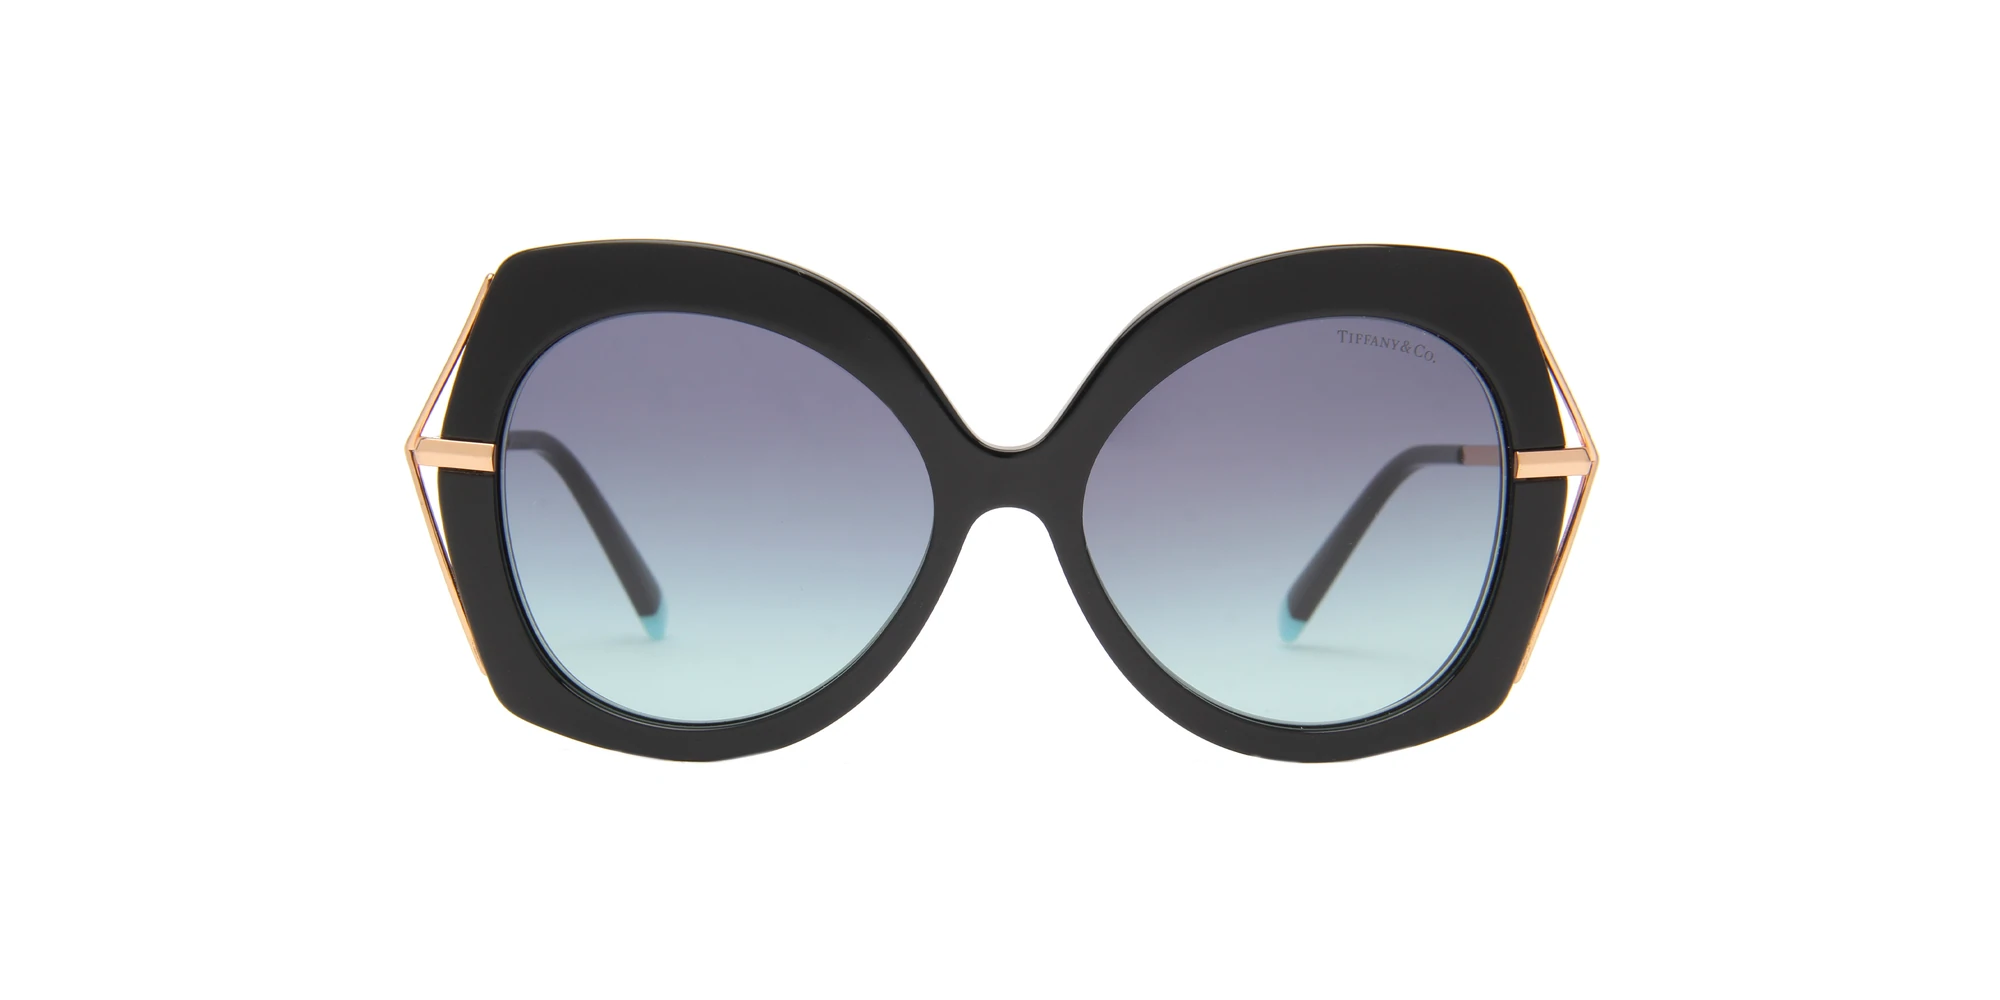 Tiffany - TF4169 Black:Smoke Butterfly Women Sunglasses - 54mm